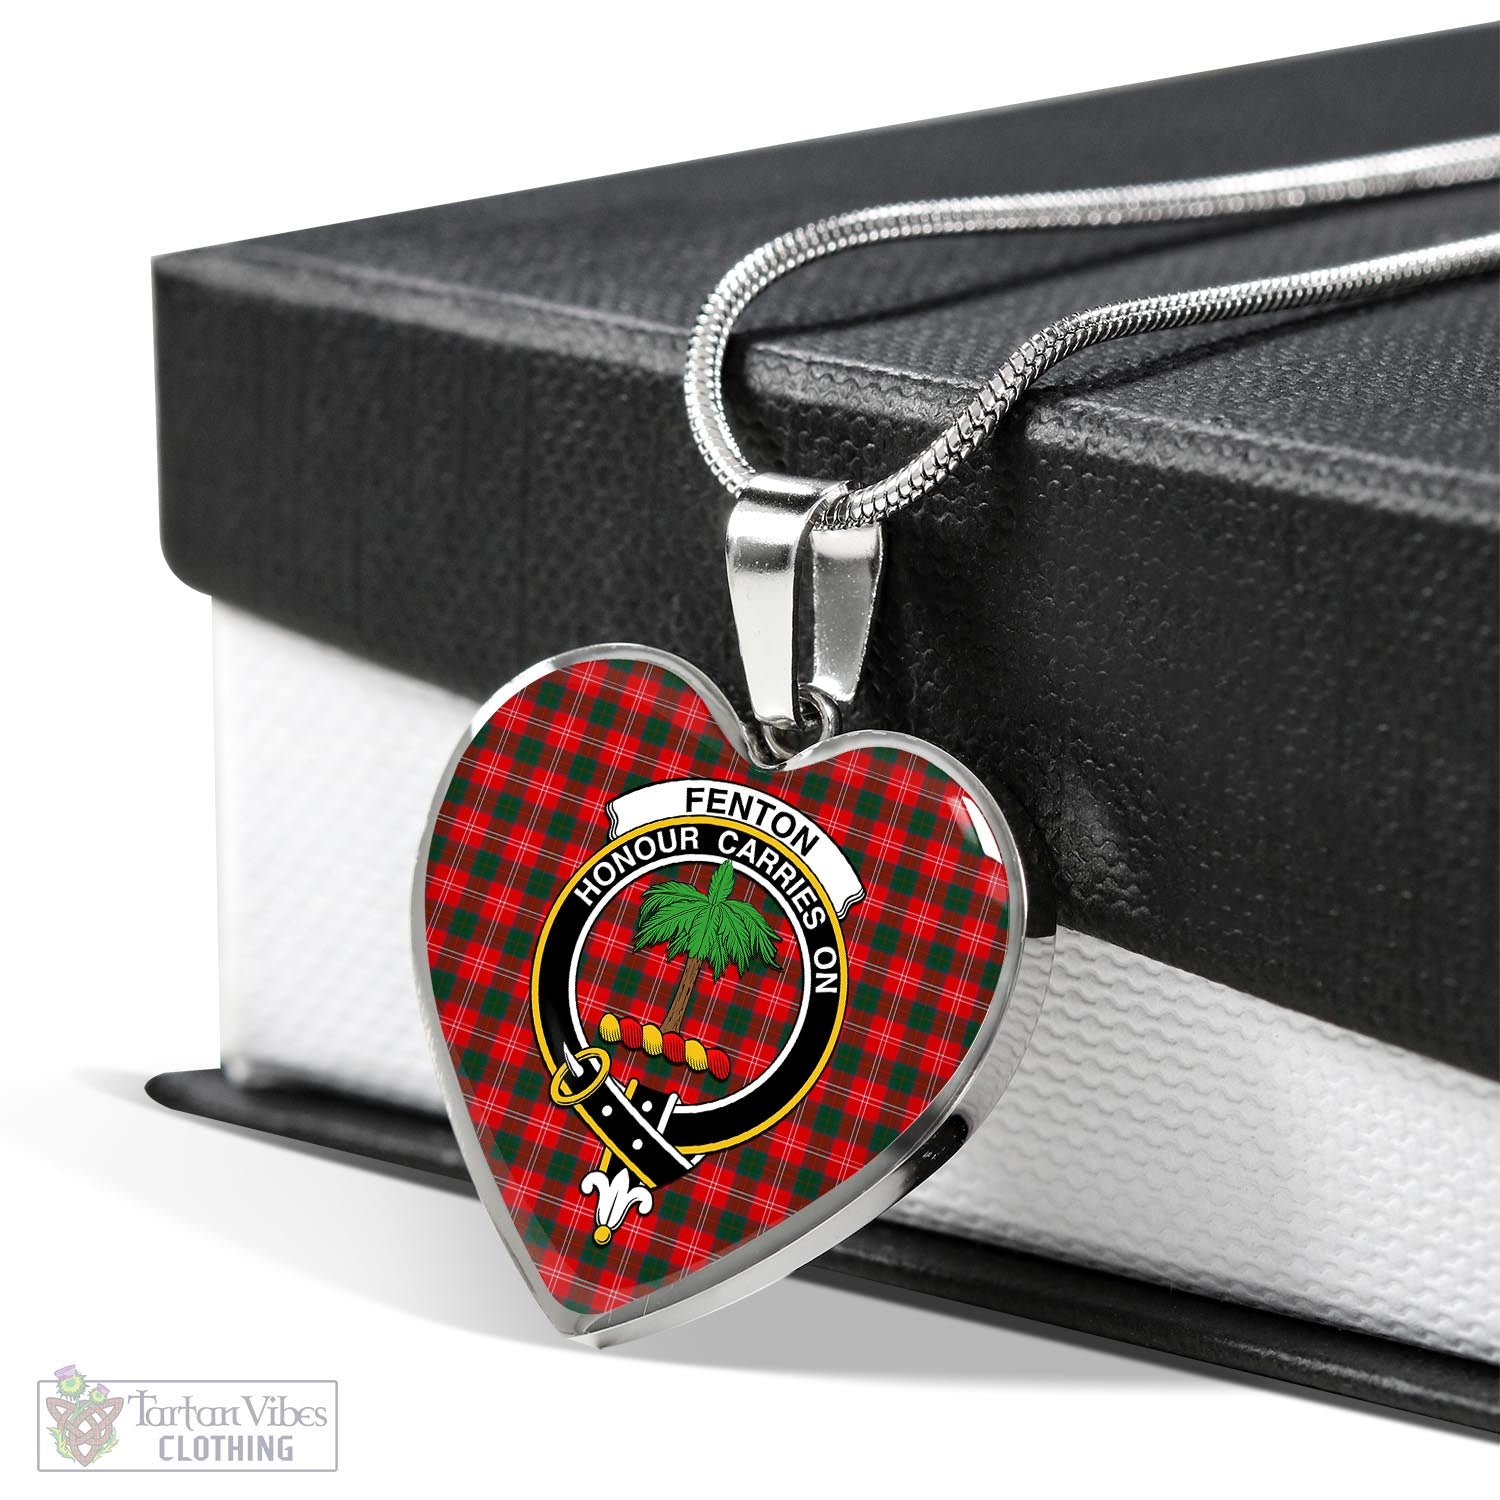 Tartan Vibes Clothing Fenton Tartan Heart Necklace with Family Crest